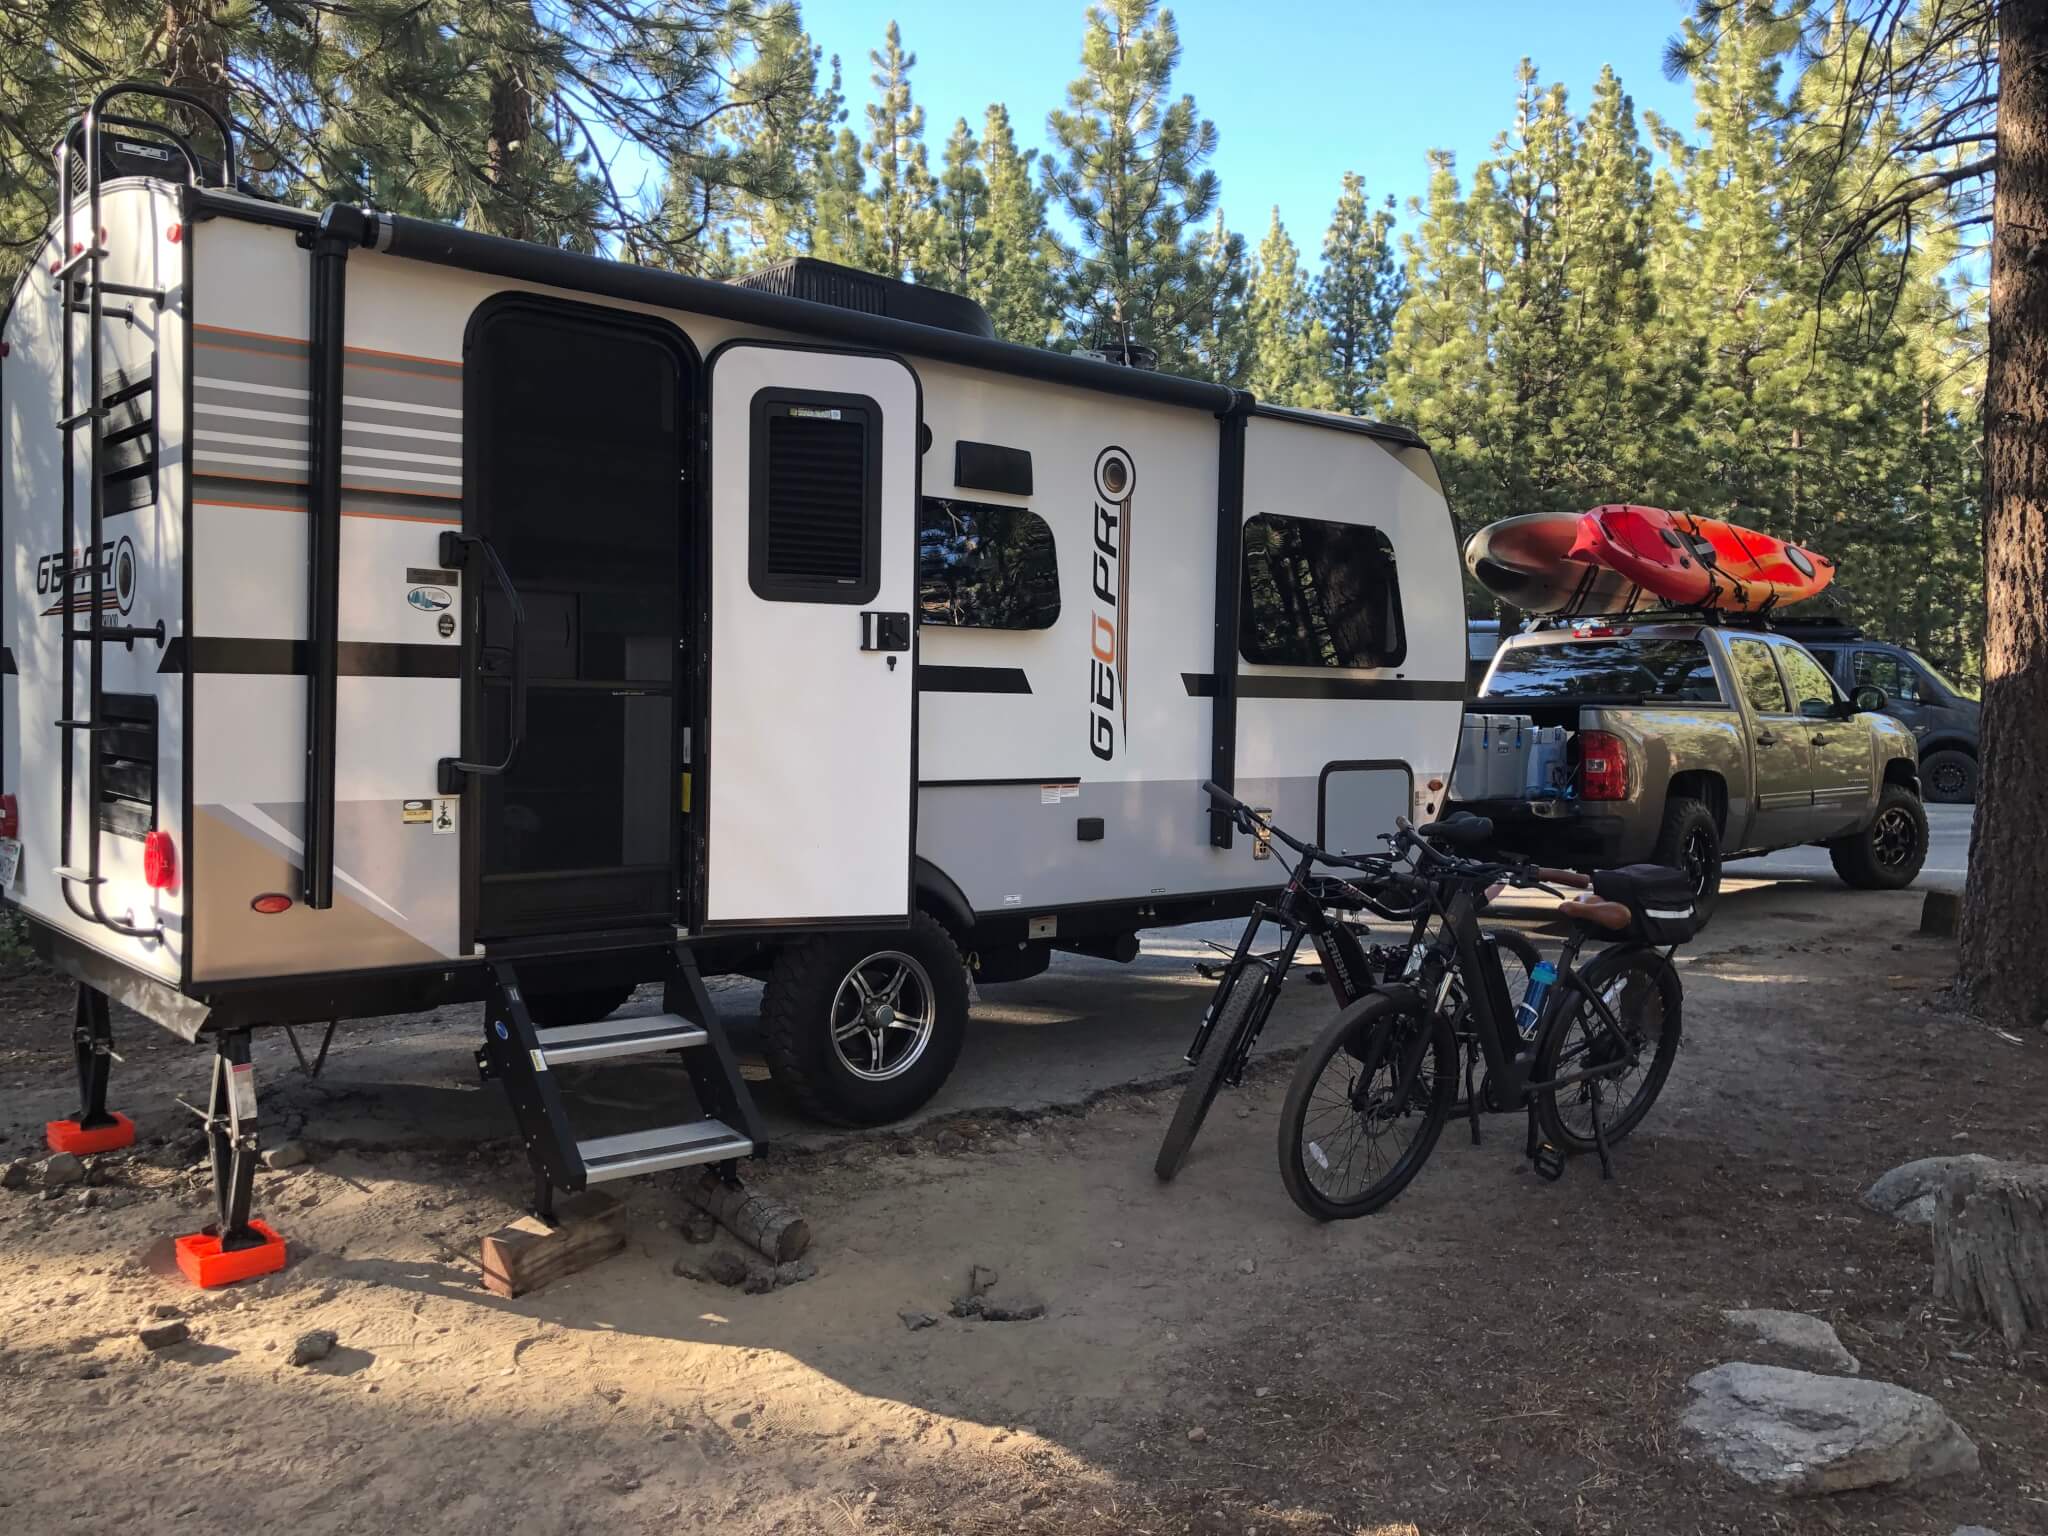 Camping with an E-bike - trailer